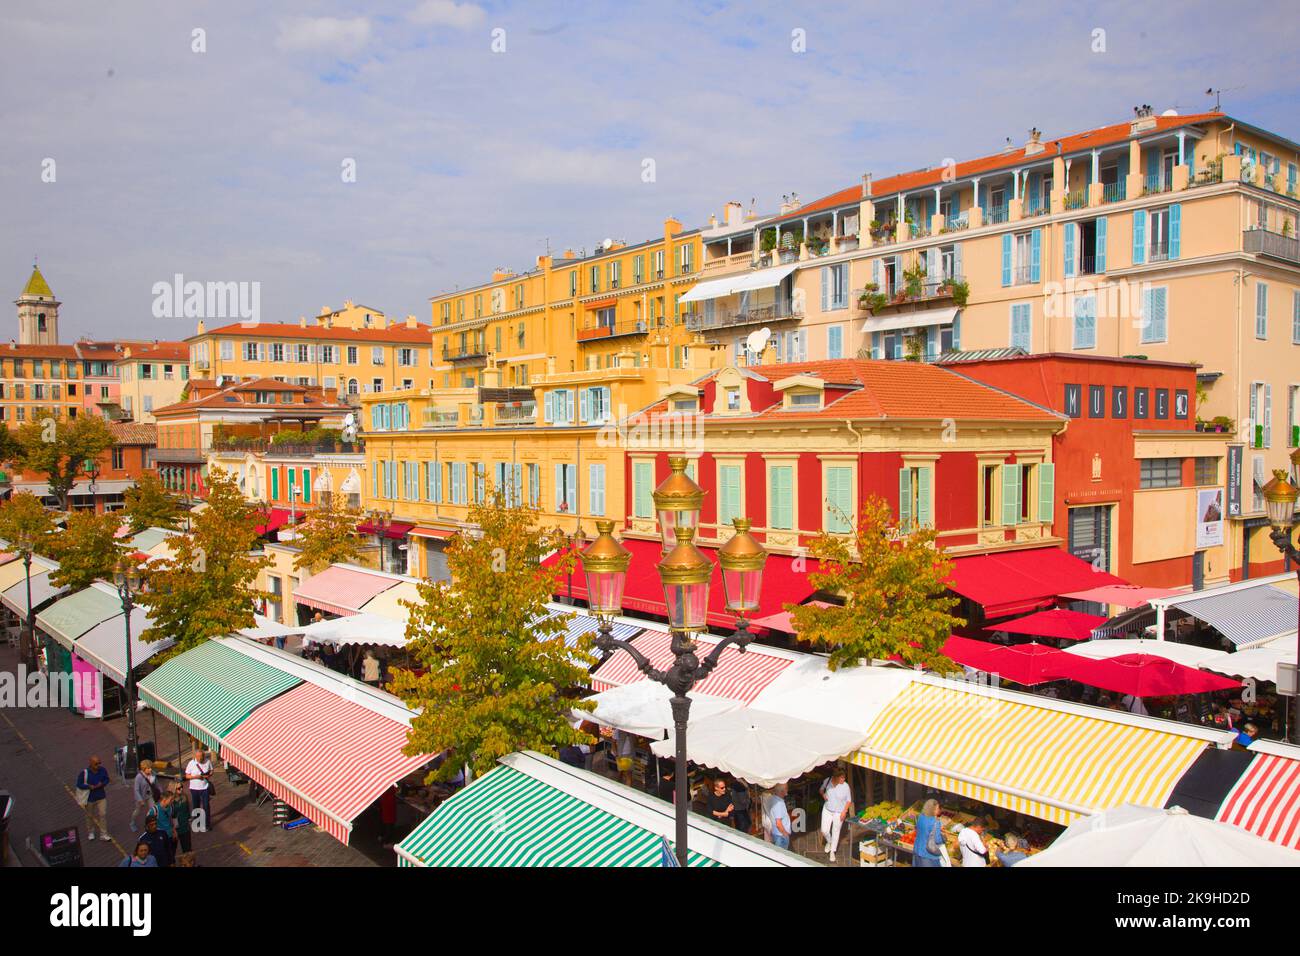 France, Cote d'Azur, Nice, Cours Saleya, Stock Photo